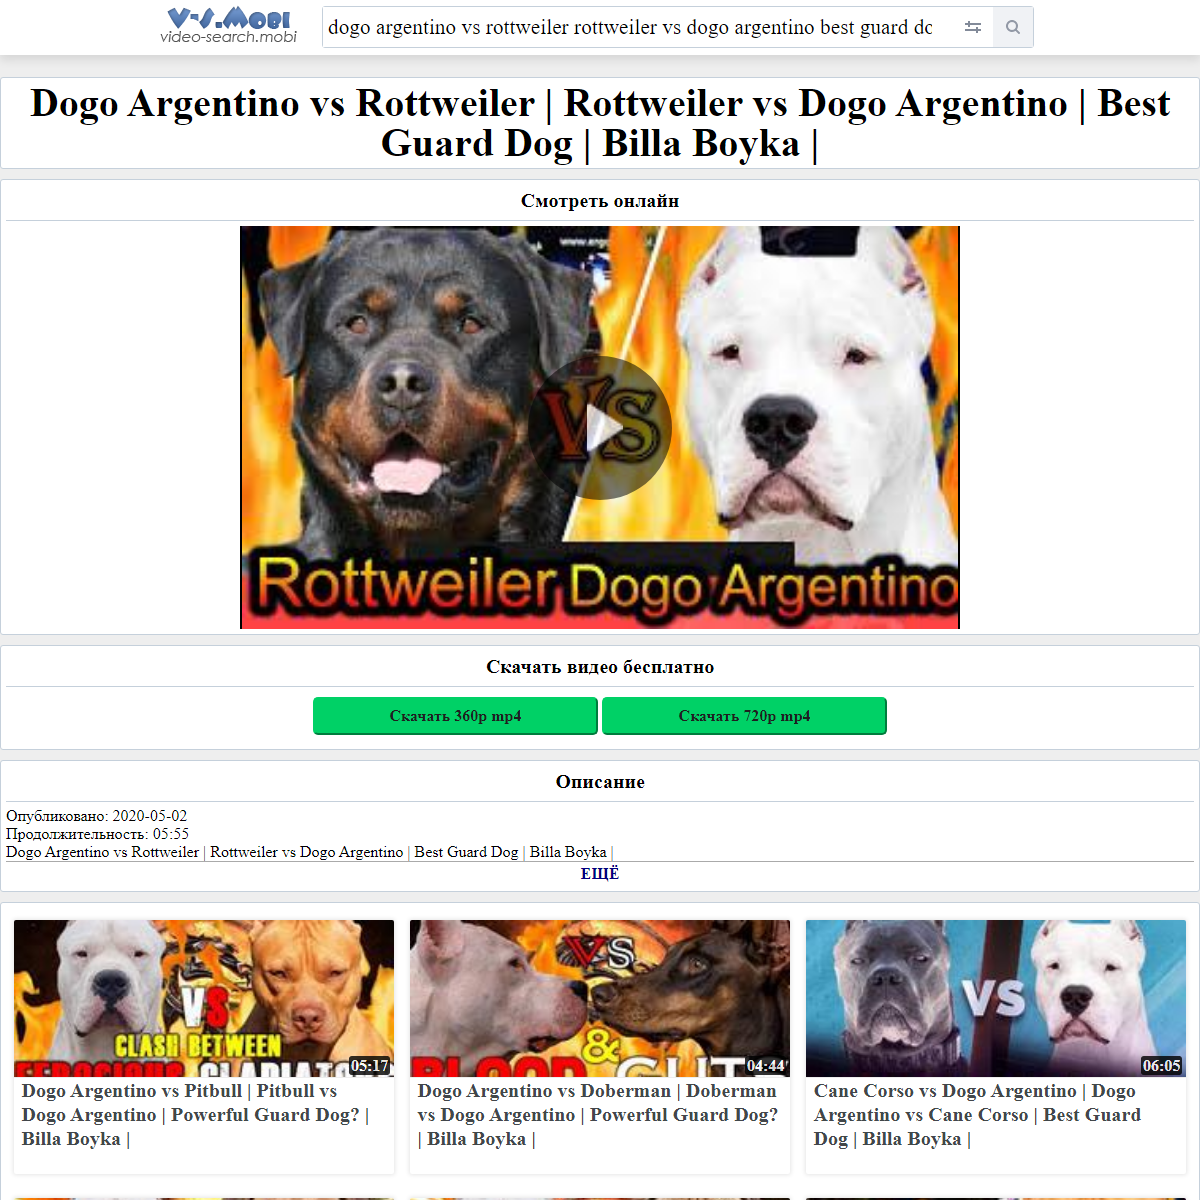 A complete backup of https://v-s.mobi/dogo-argentino-vs-rottweiler-rottweiler-vs-dogo-argentino-best-guard-dog-billa-boyka-05:55